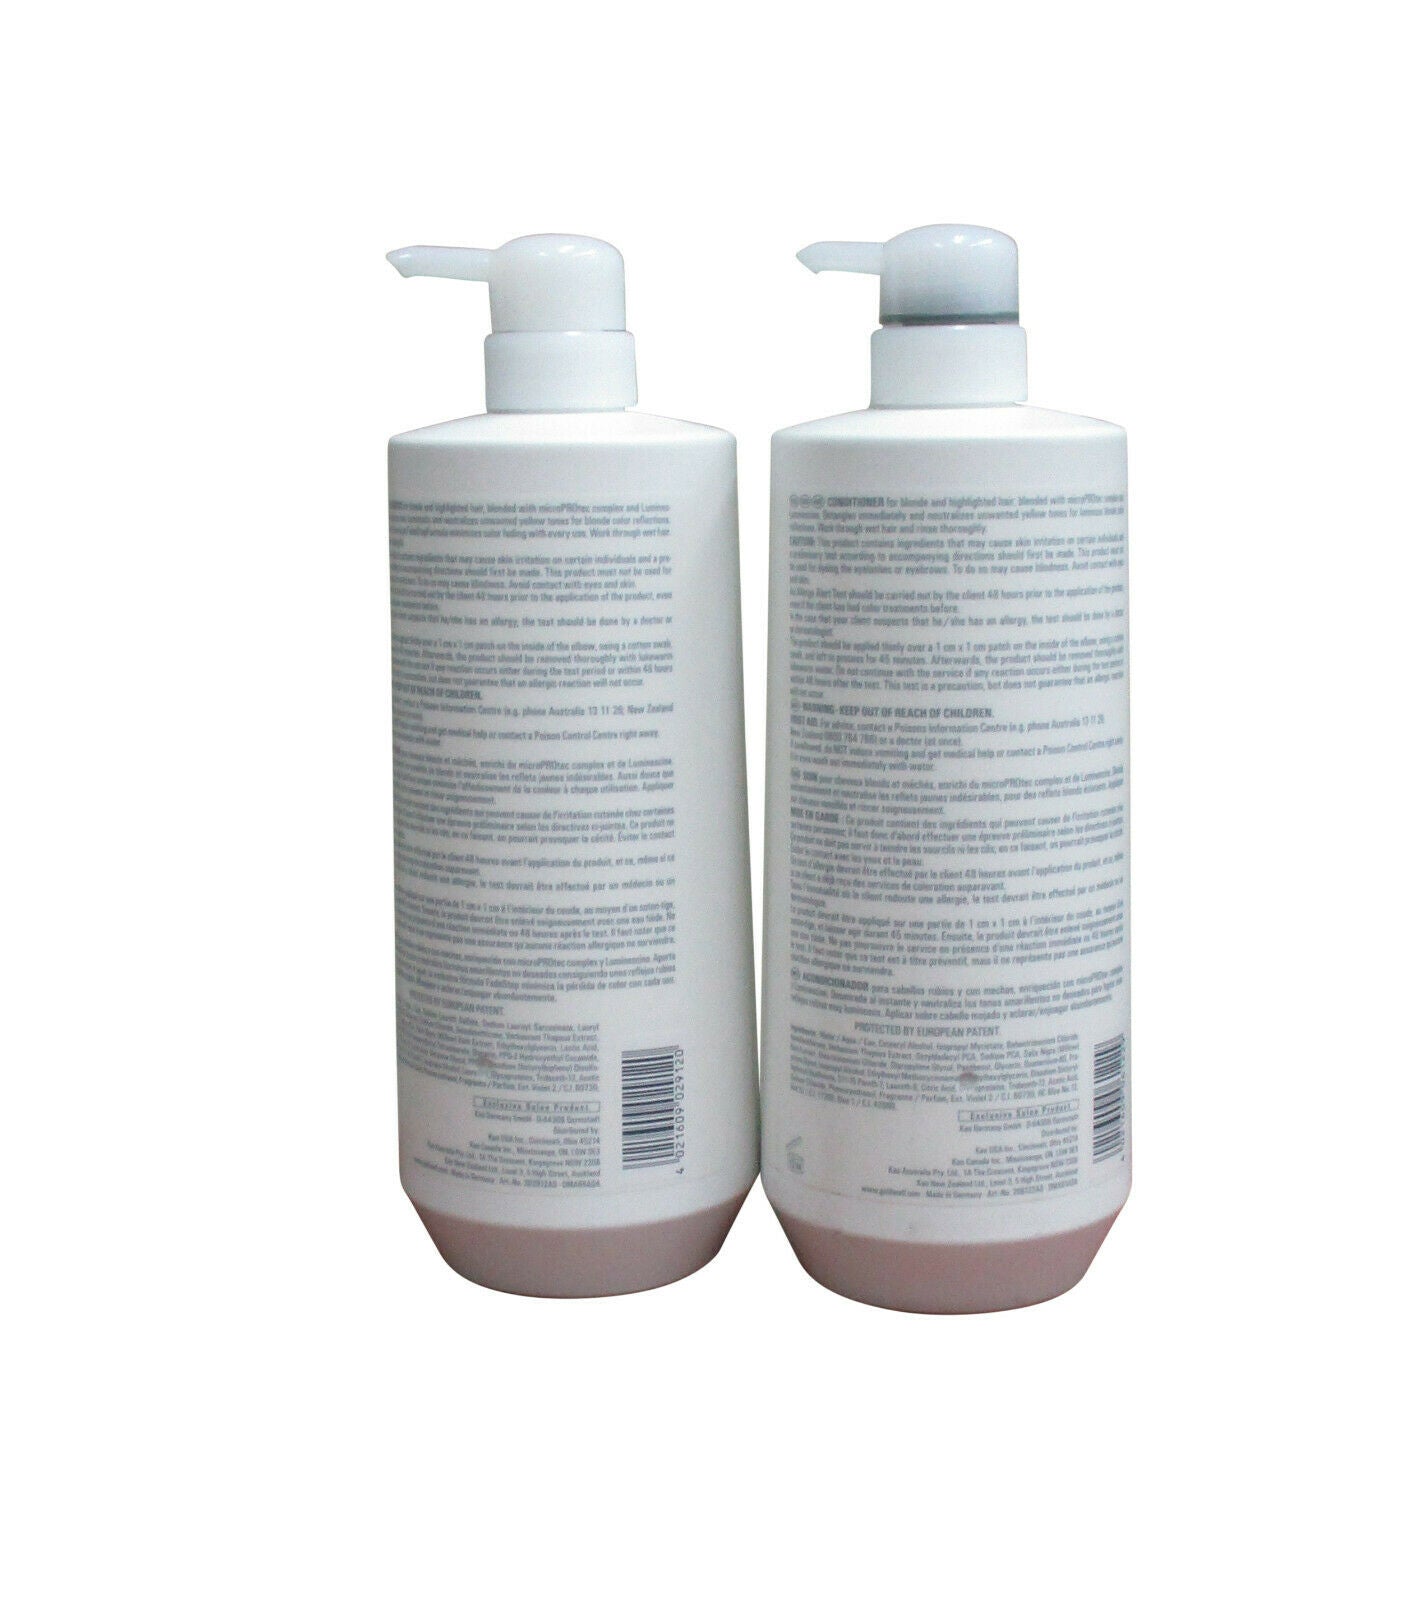 Goldwell Dualsenses Blonde Highlights Anti-Yellow Shampoo & Conditioner Liter Set